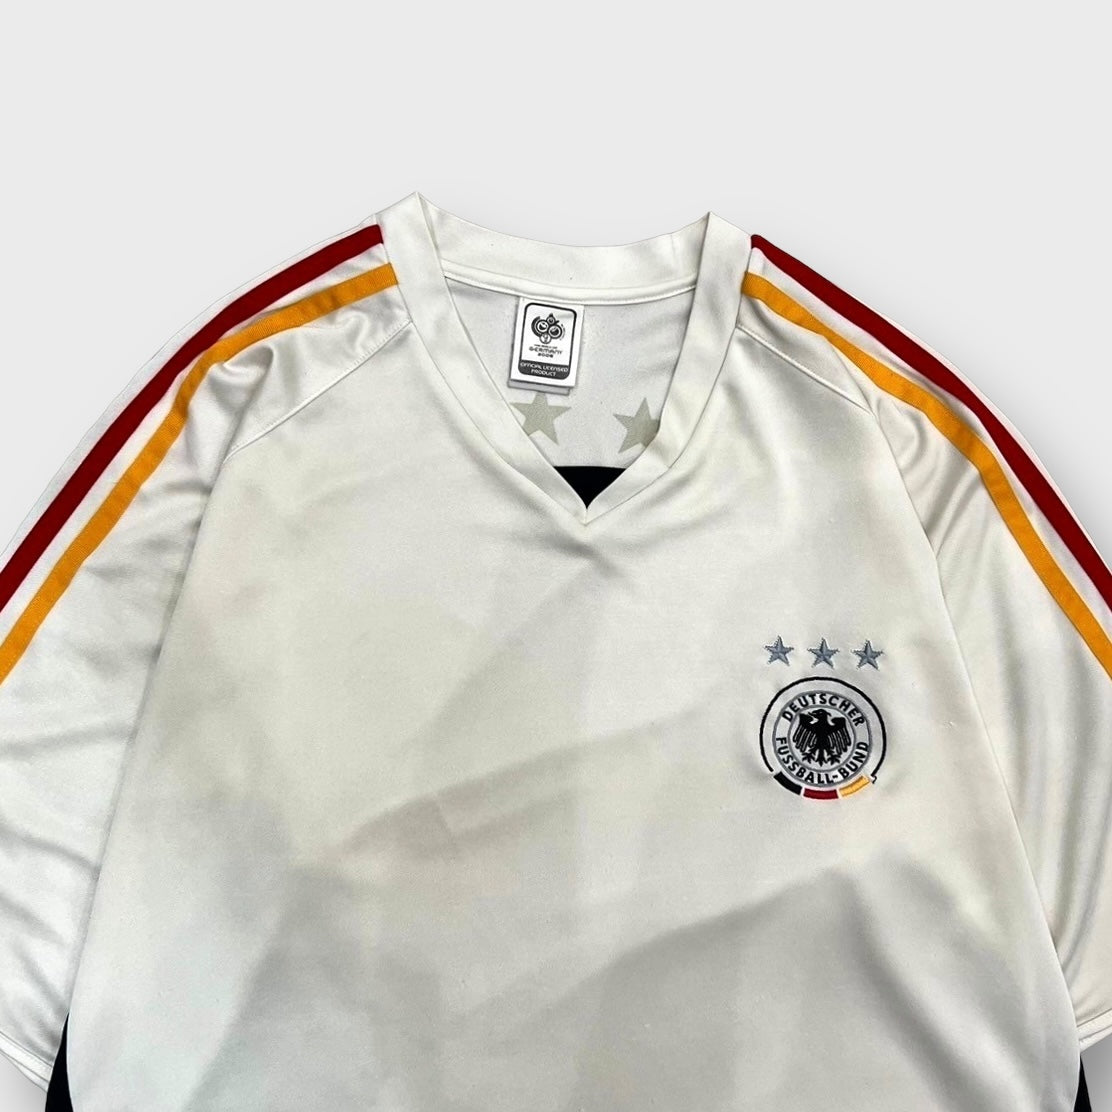 00's adidas"Germany" team shirt